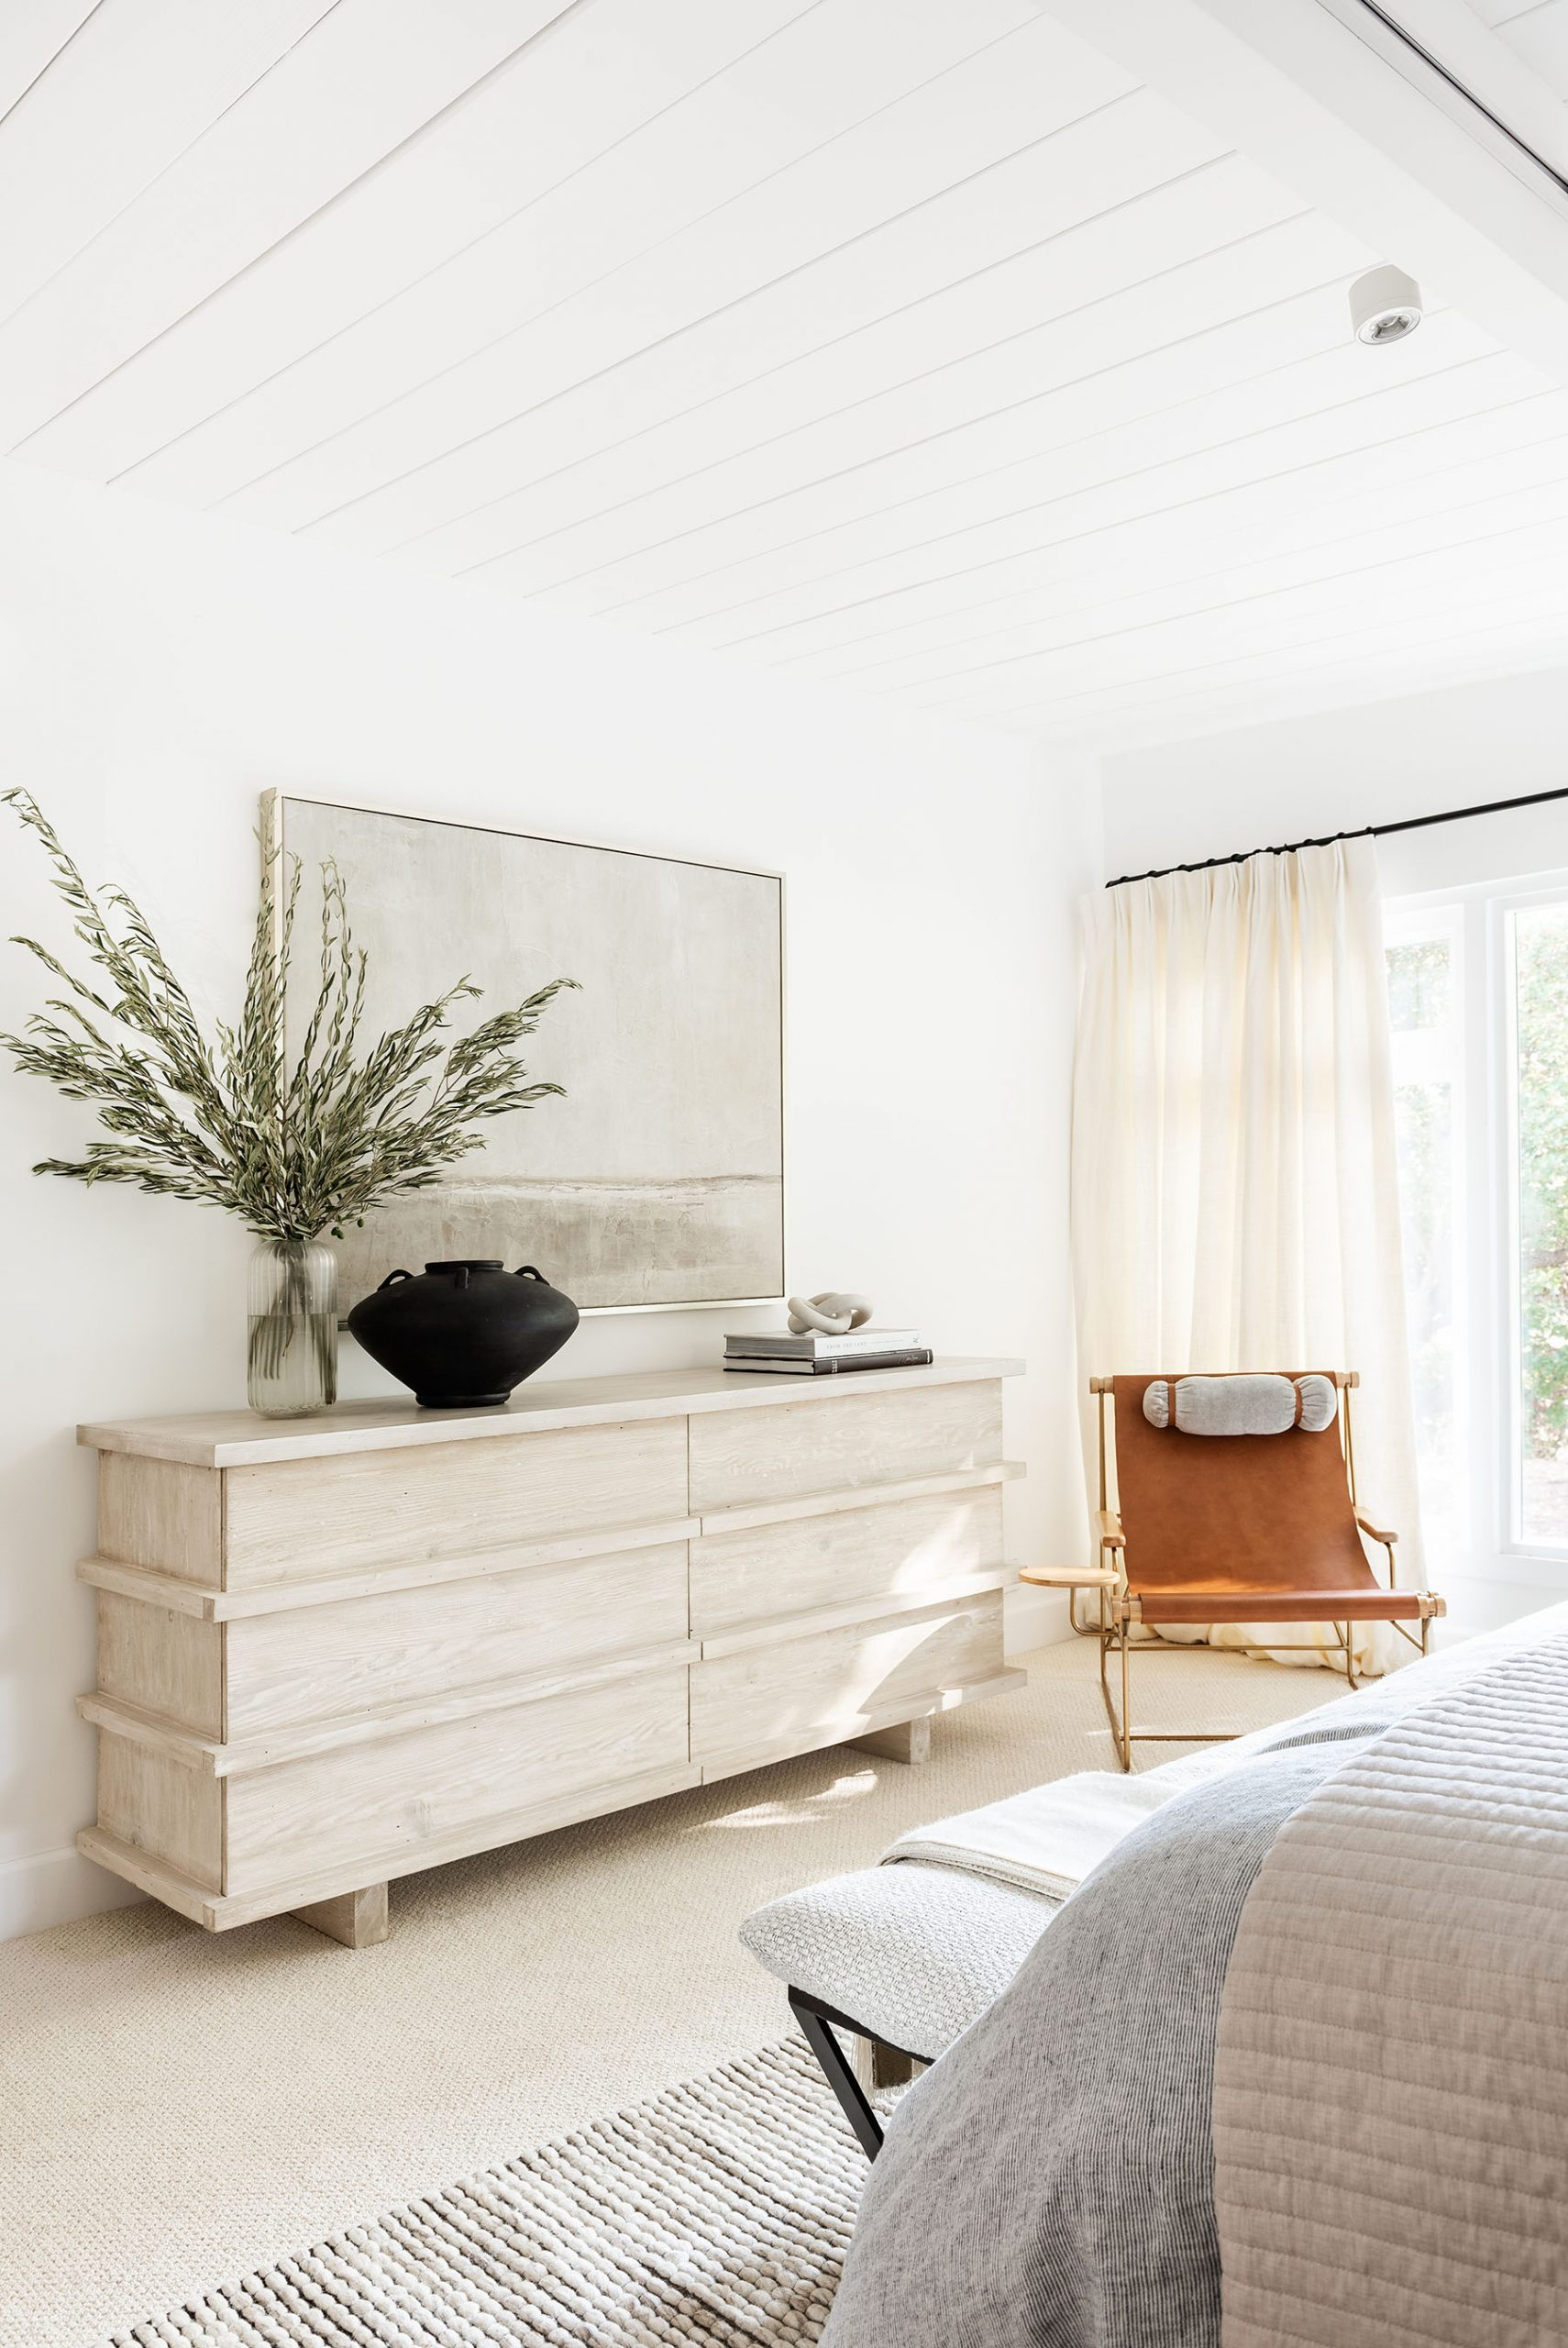 Wood dresser in bedroom with coastal artwork